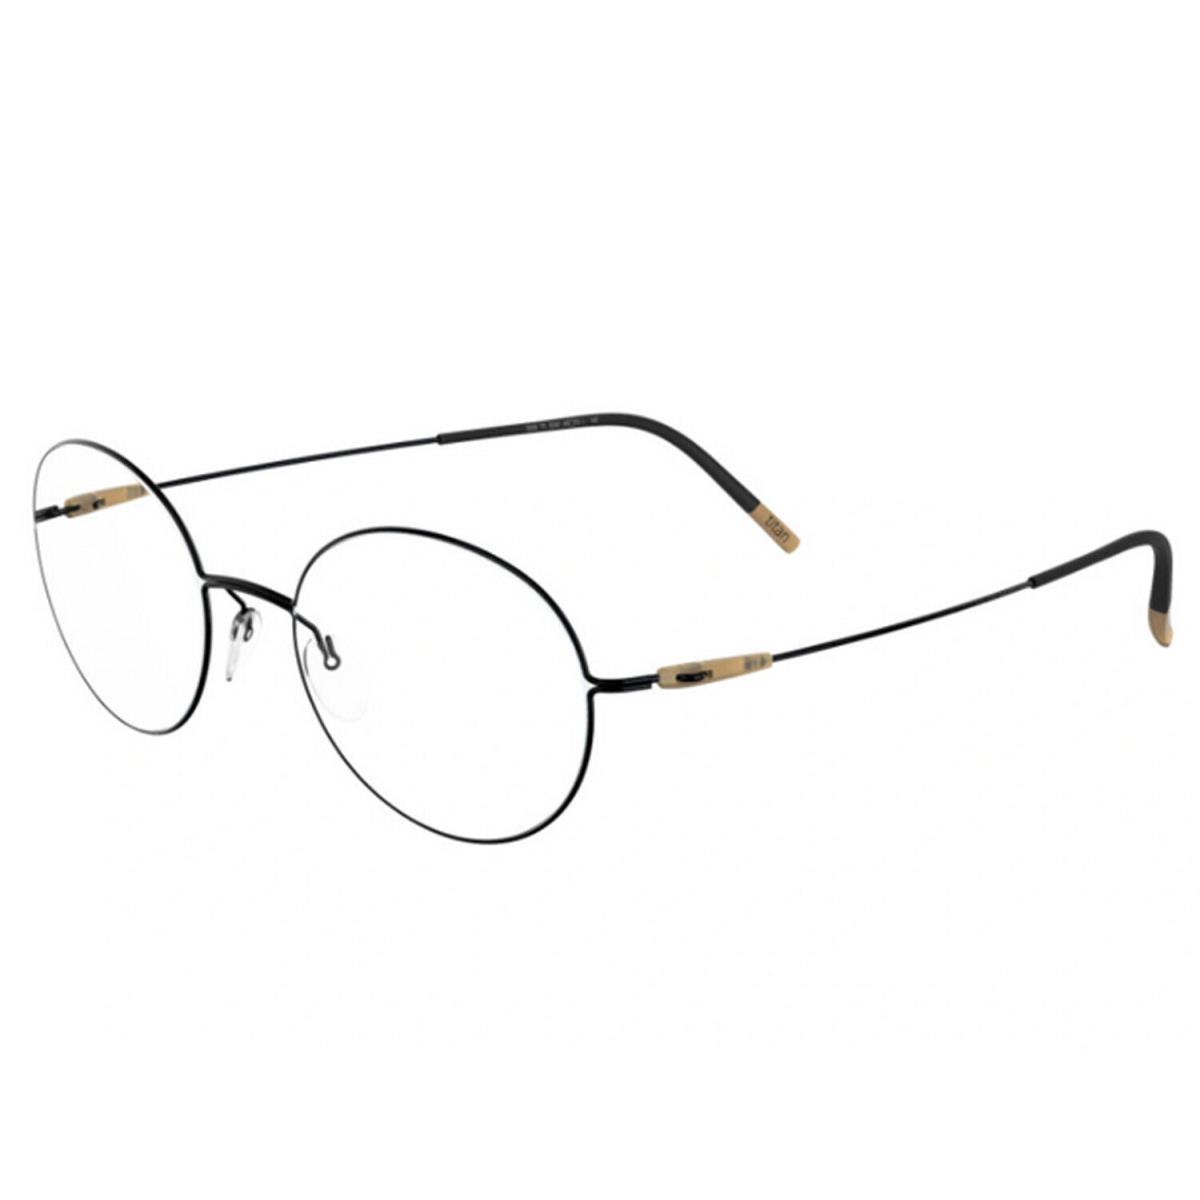 Silhouette Eyeglasses Dynamics Colorwave 49-19-140 Black 5509-75-9240-49MM